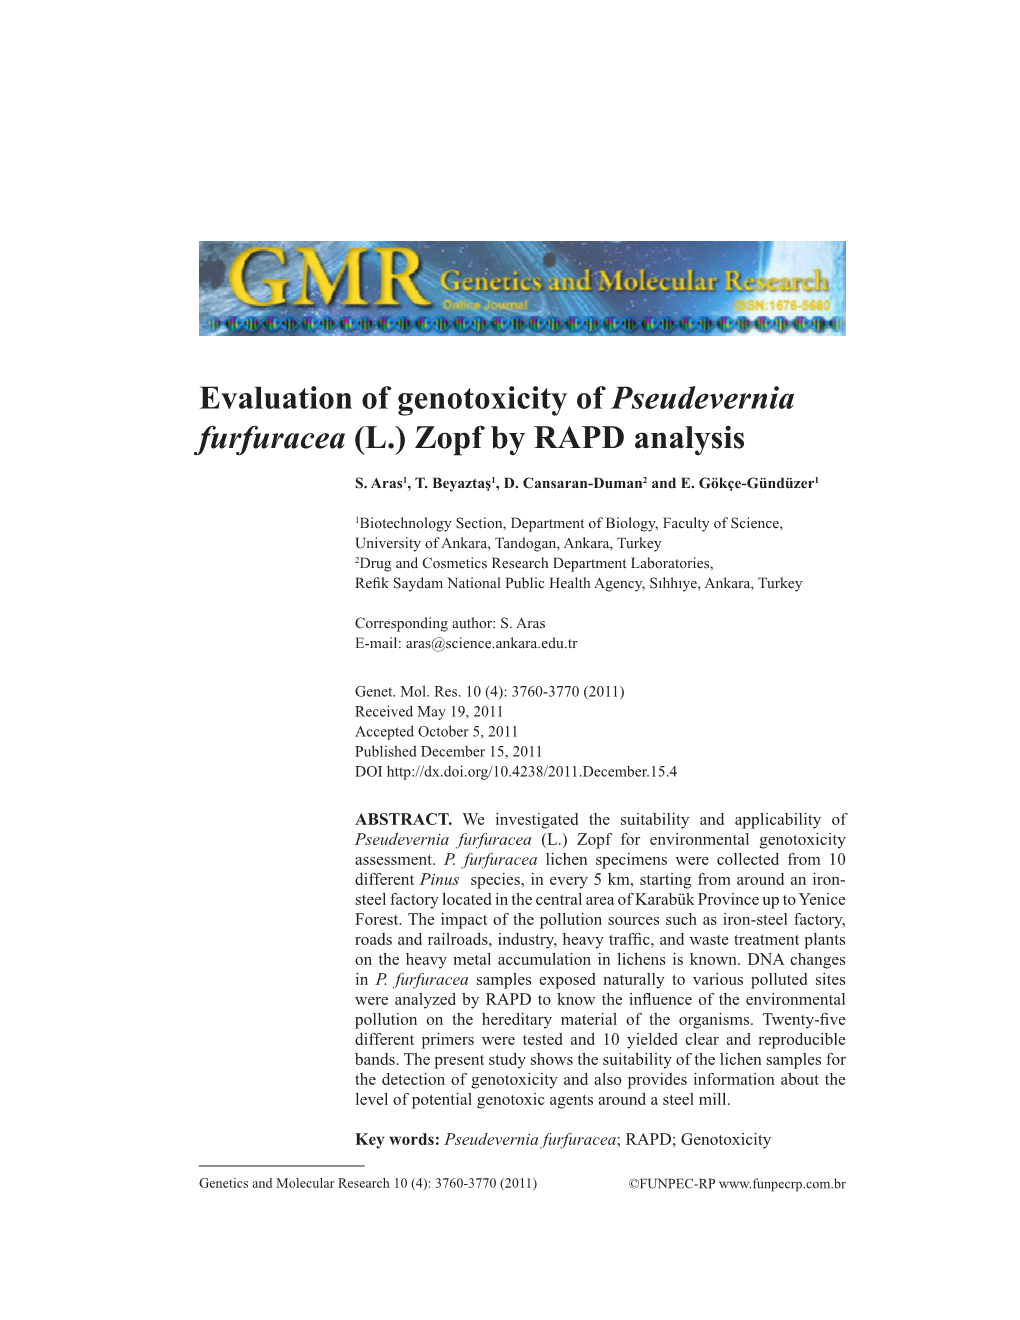 Evaluation of Genotoxicity of Pseudevernia Furfuracea (L.) Zopf by RAPD Analysis